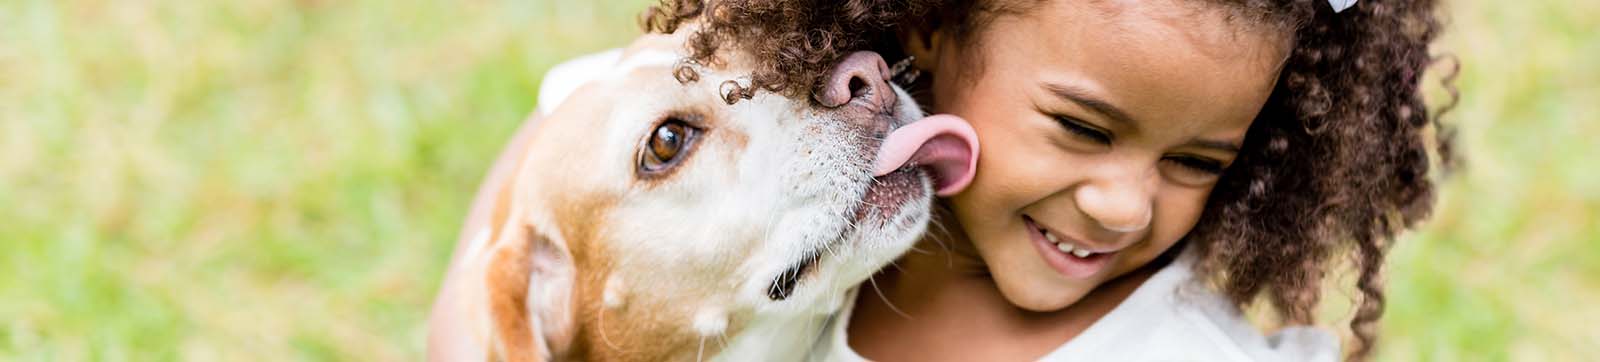 dog kissing young girl on the cheek